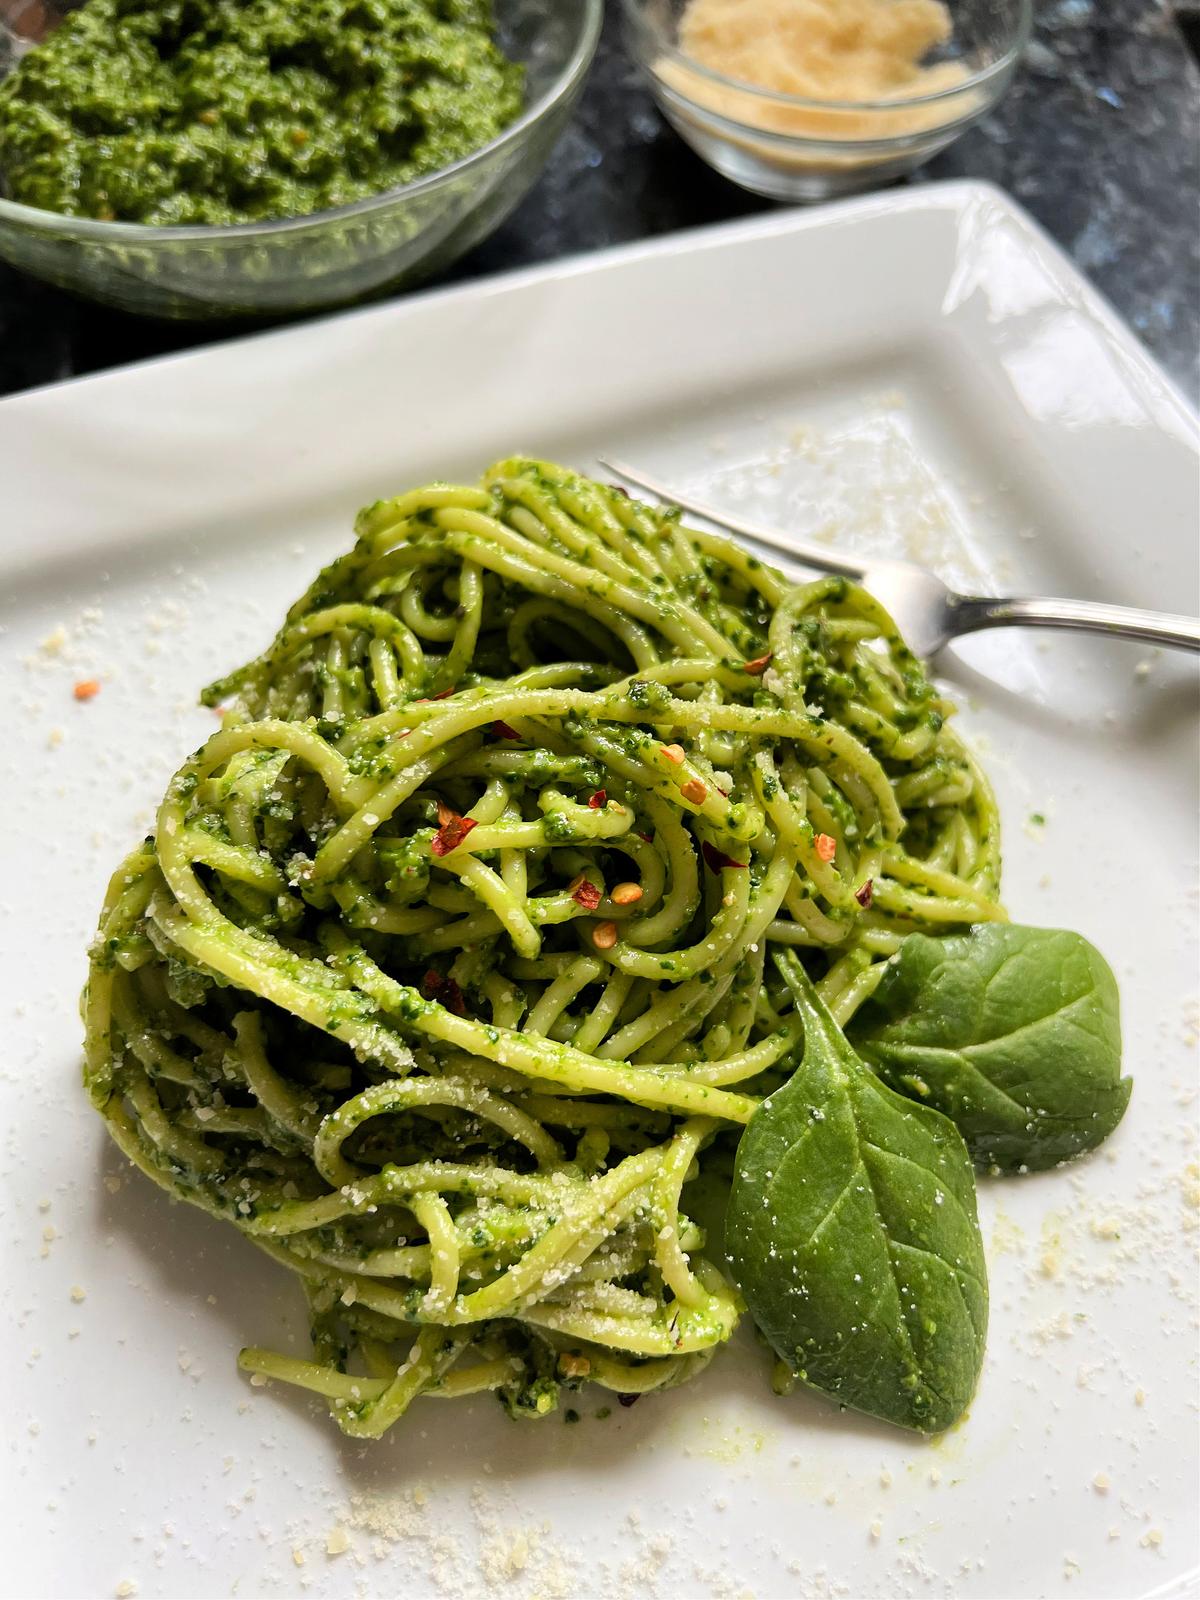 Green spaghetti is dressed in a lemony spinach pesto. (Gretchen McKay/Pittsburgh Post-Gazette/TNS)